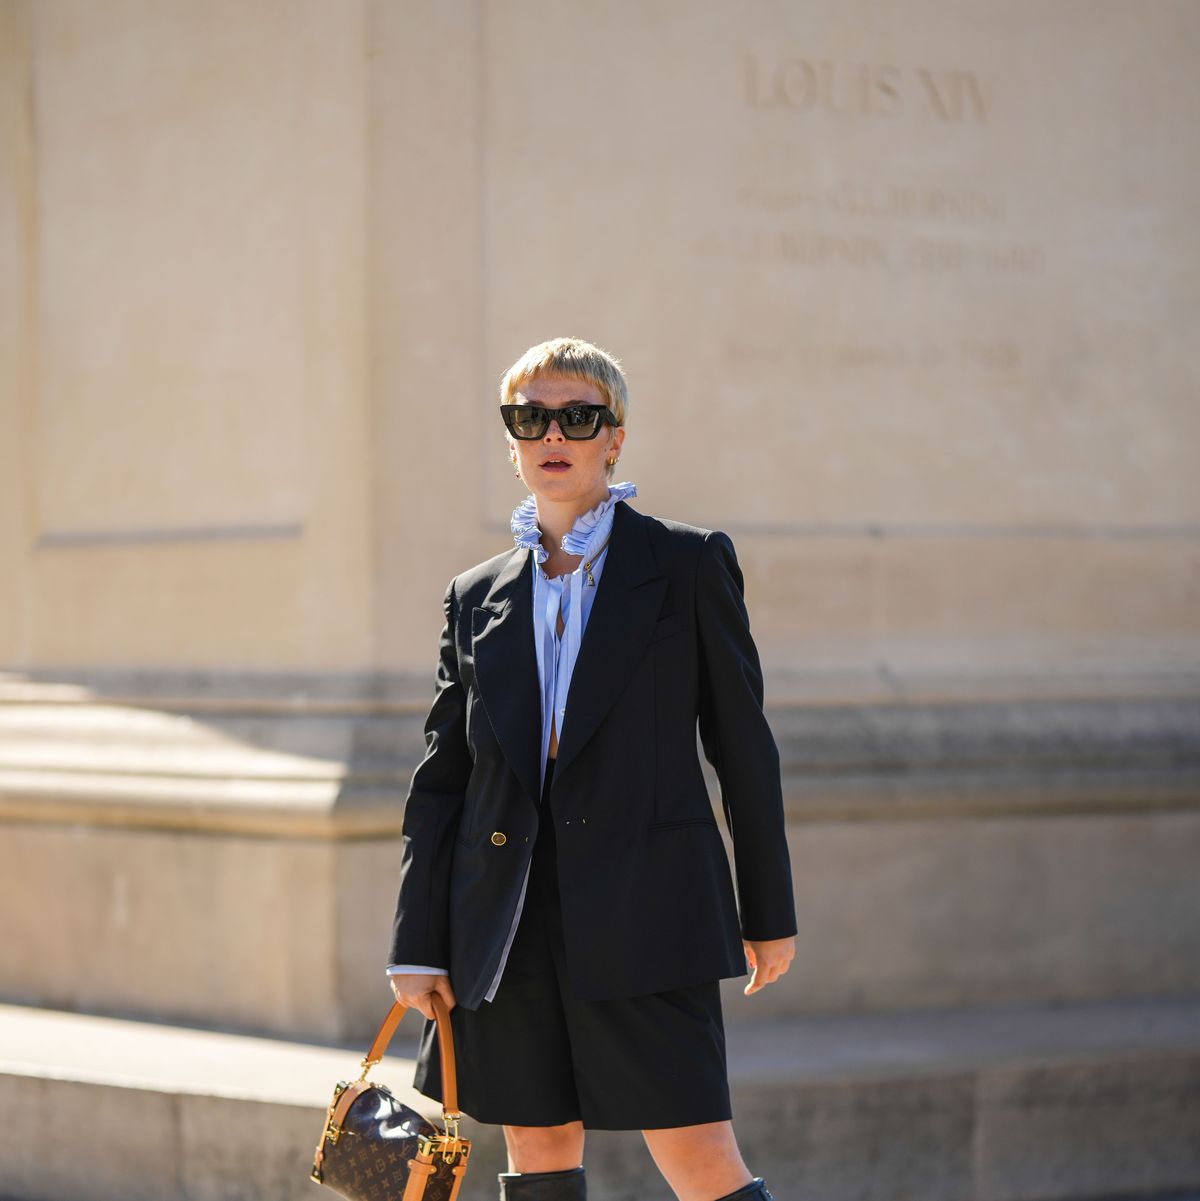 Dale un “twist” a tus looks con un bolso icónico de Louis Vuitton